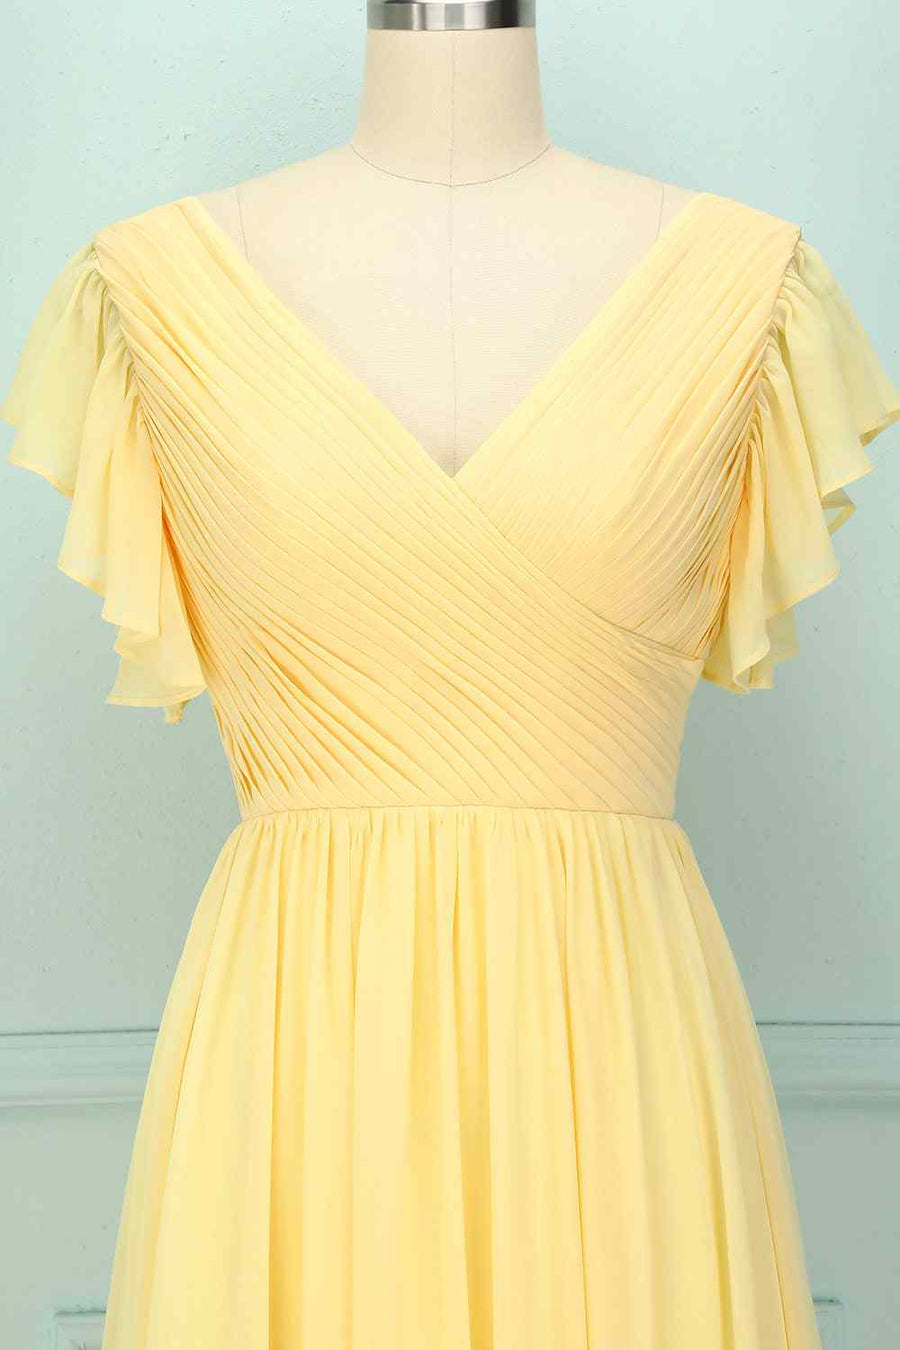 Light Yellow A-line V Neck Pleated Chiffon Ruffle Long Bridesmaid Dress